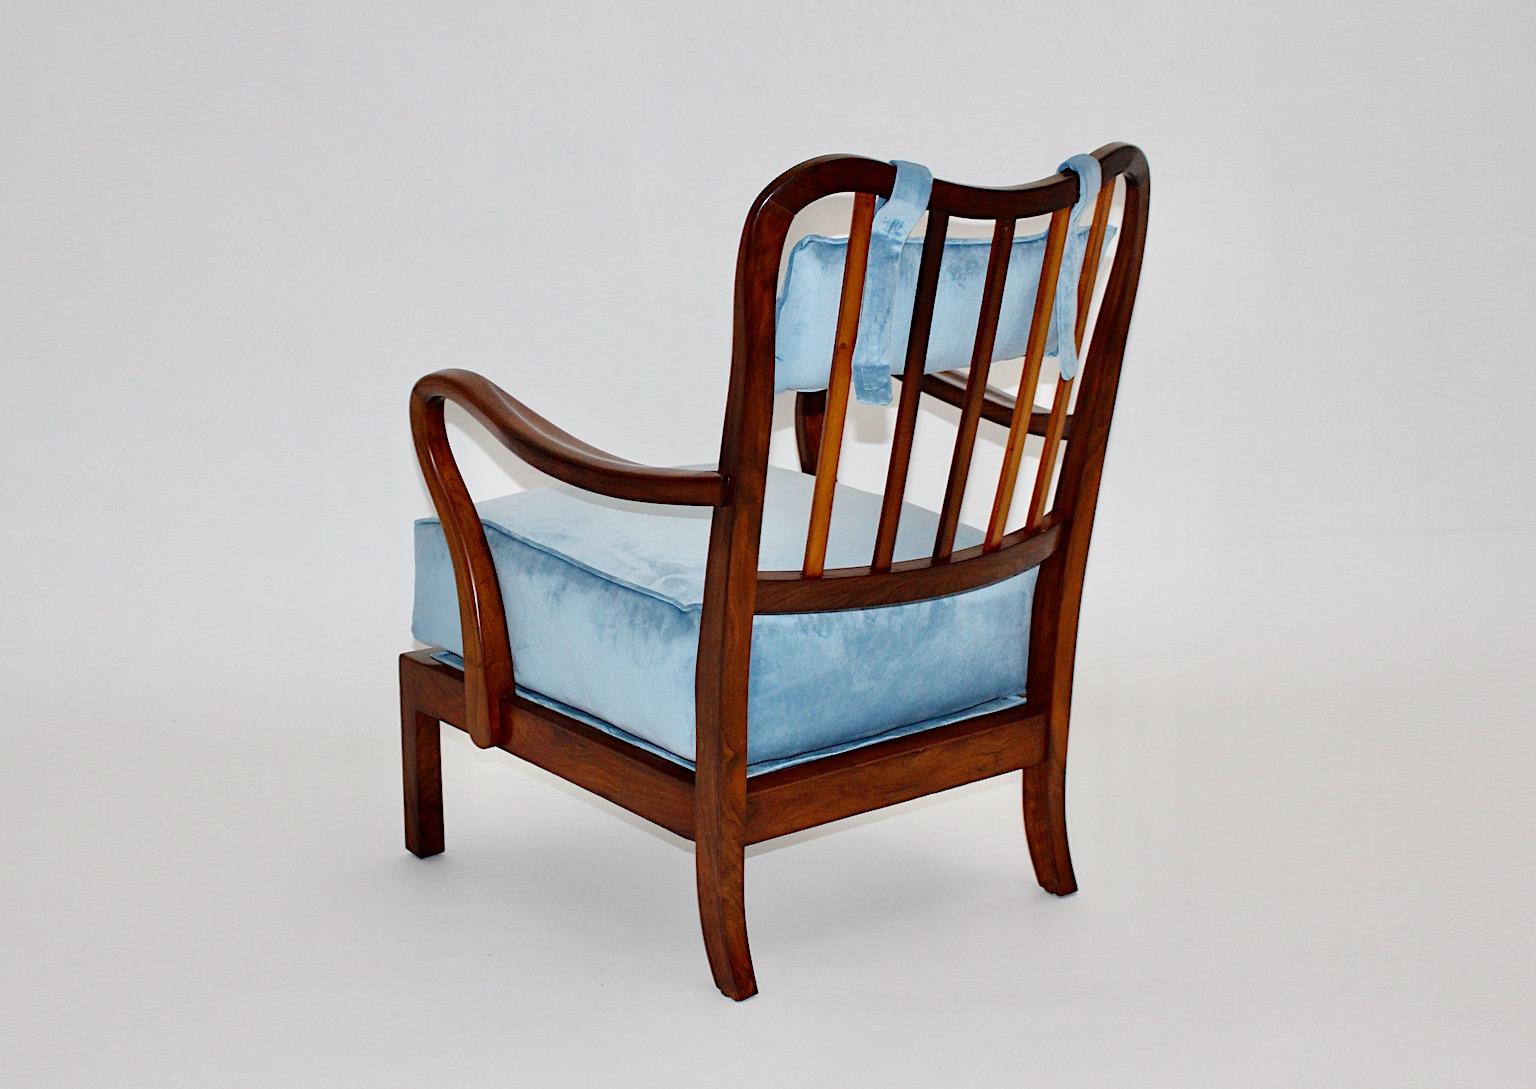 Art Deco Walnut Vintage Lounge Chair Armchair Attr. Oswald Haerdtl 1930s Vienna For Sale 1